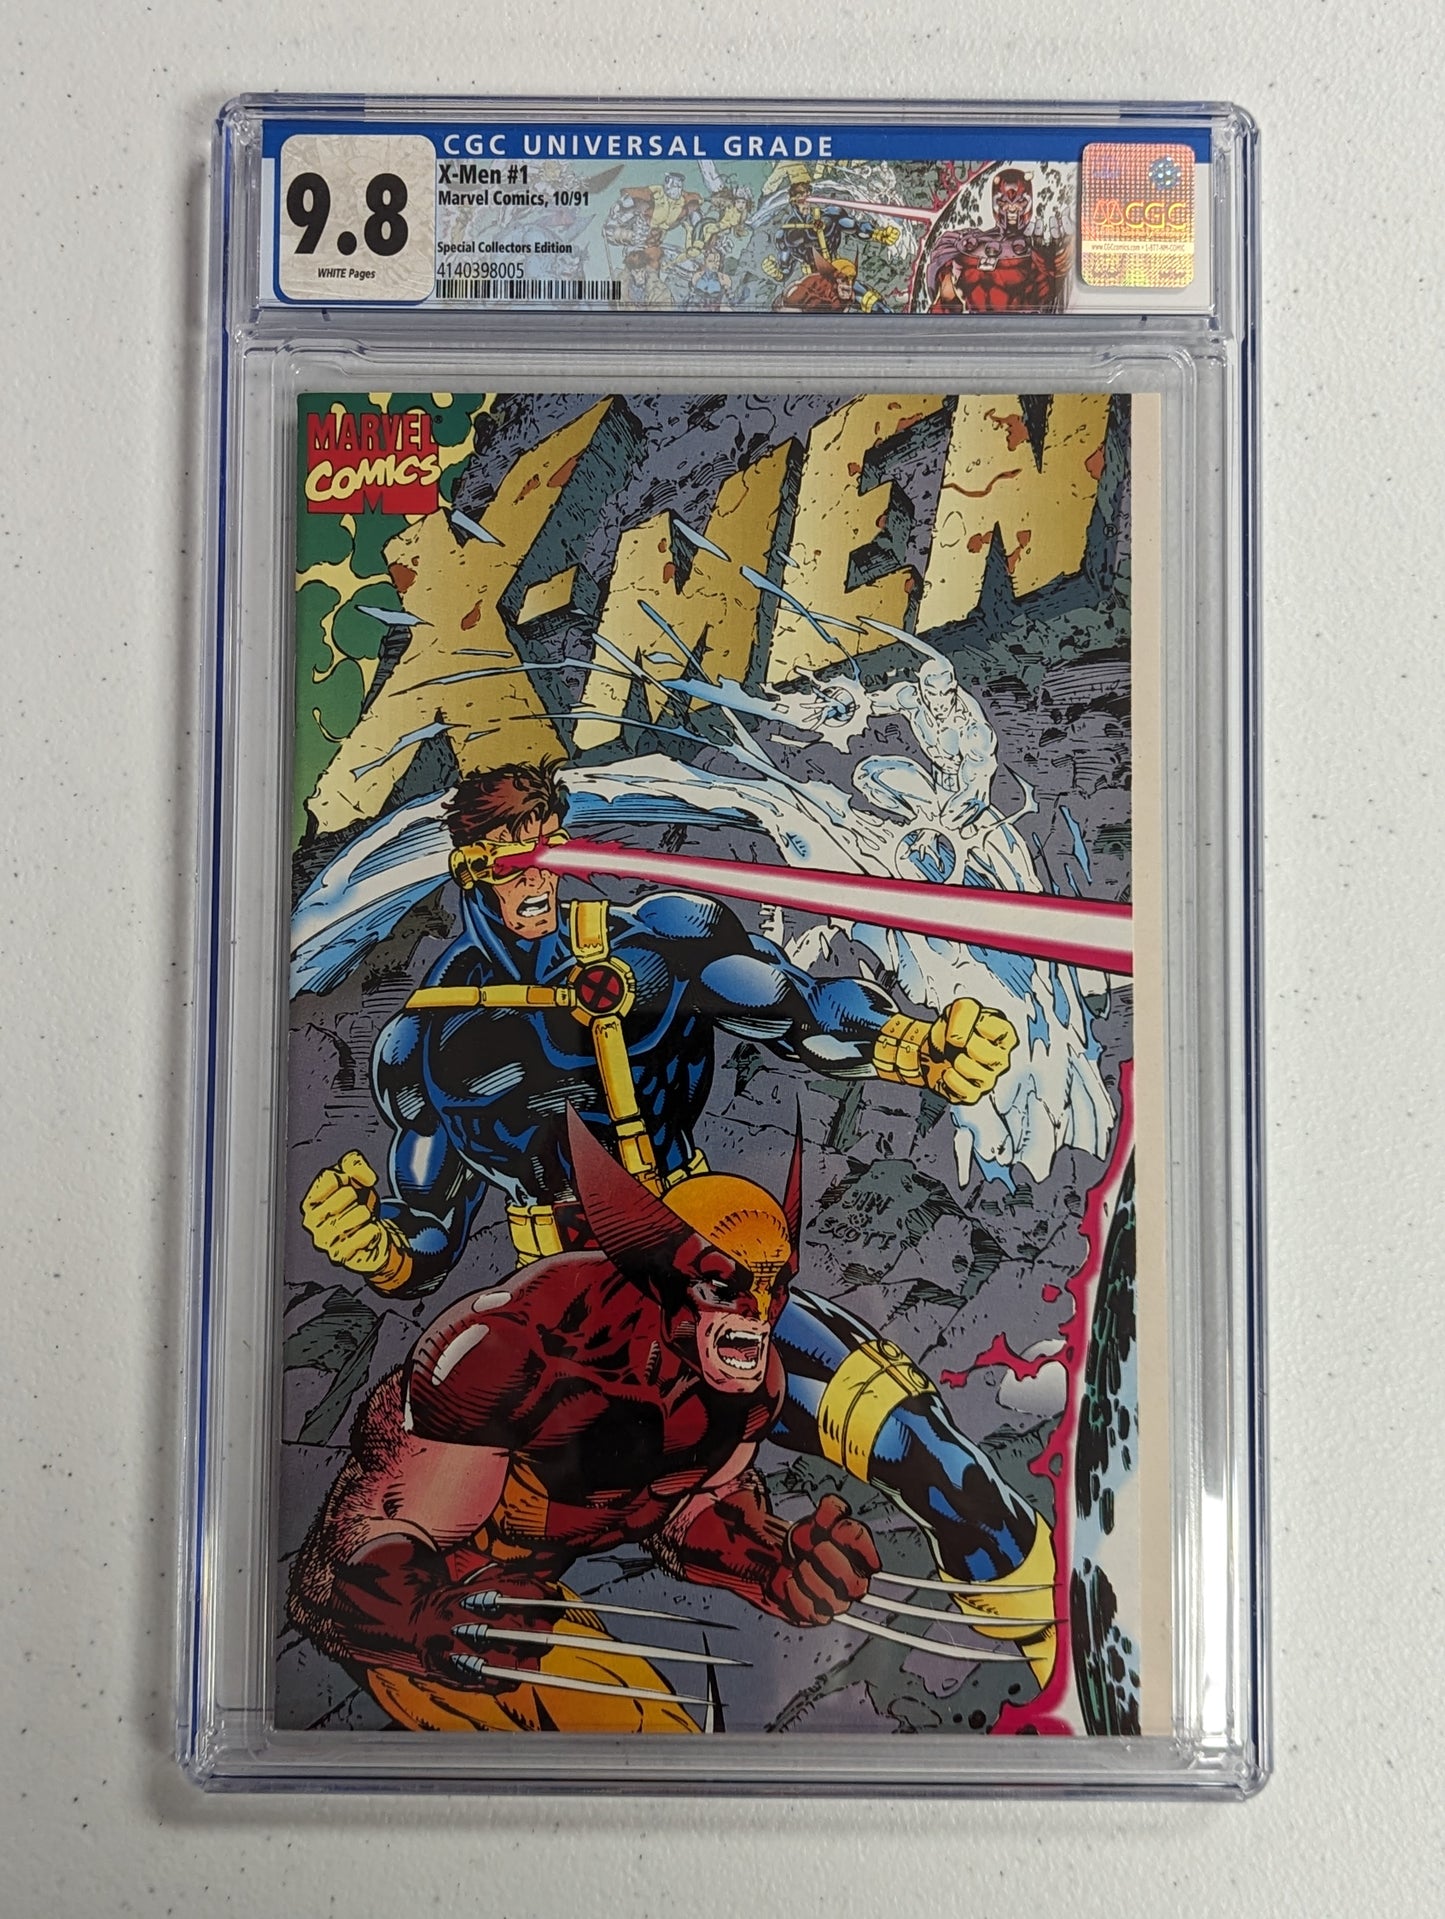 X-Men #1 (1991) Special Collector's Edition - CGC 9.8